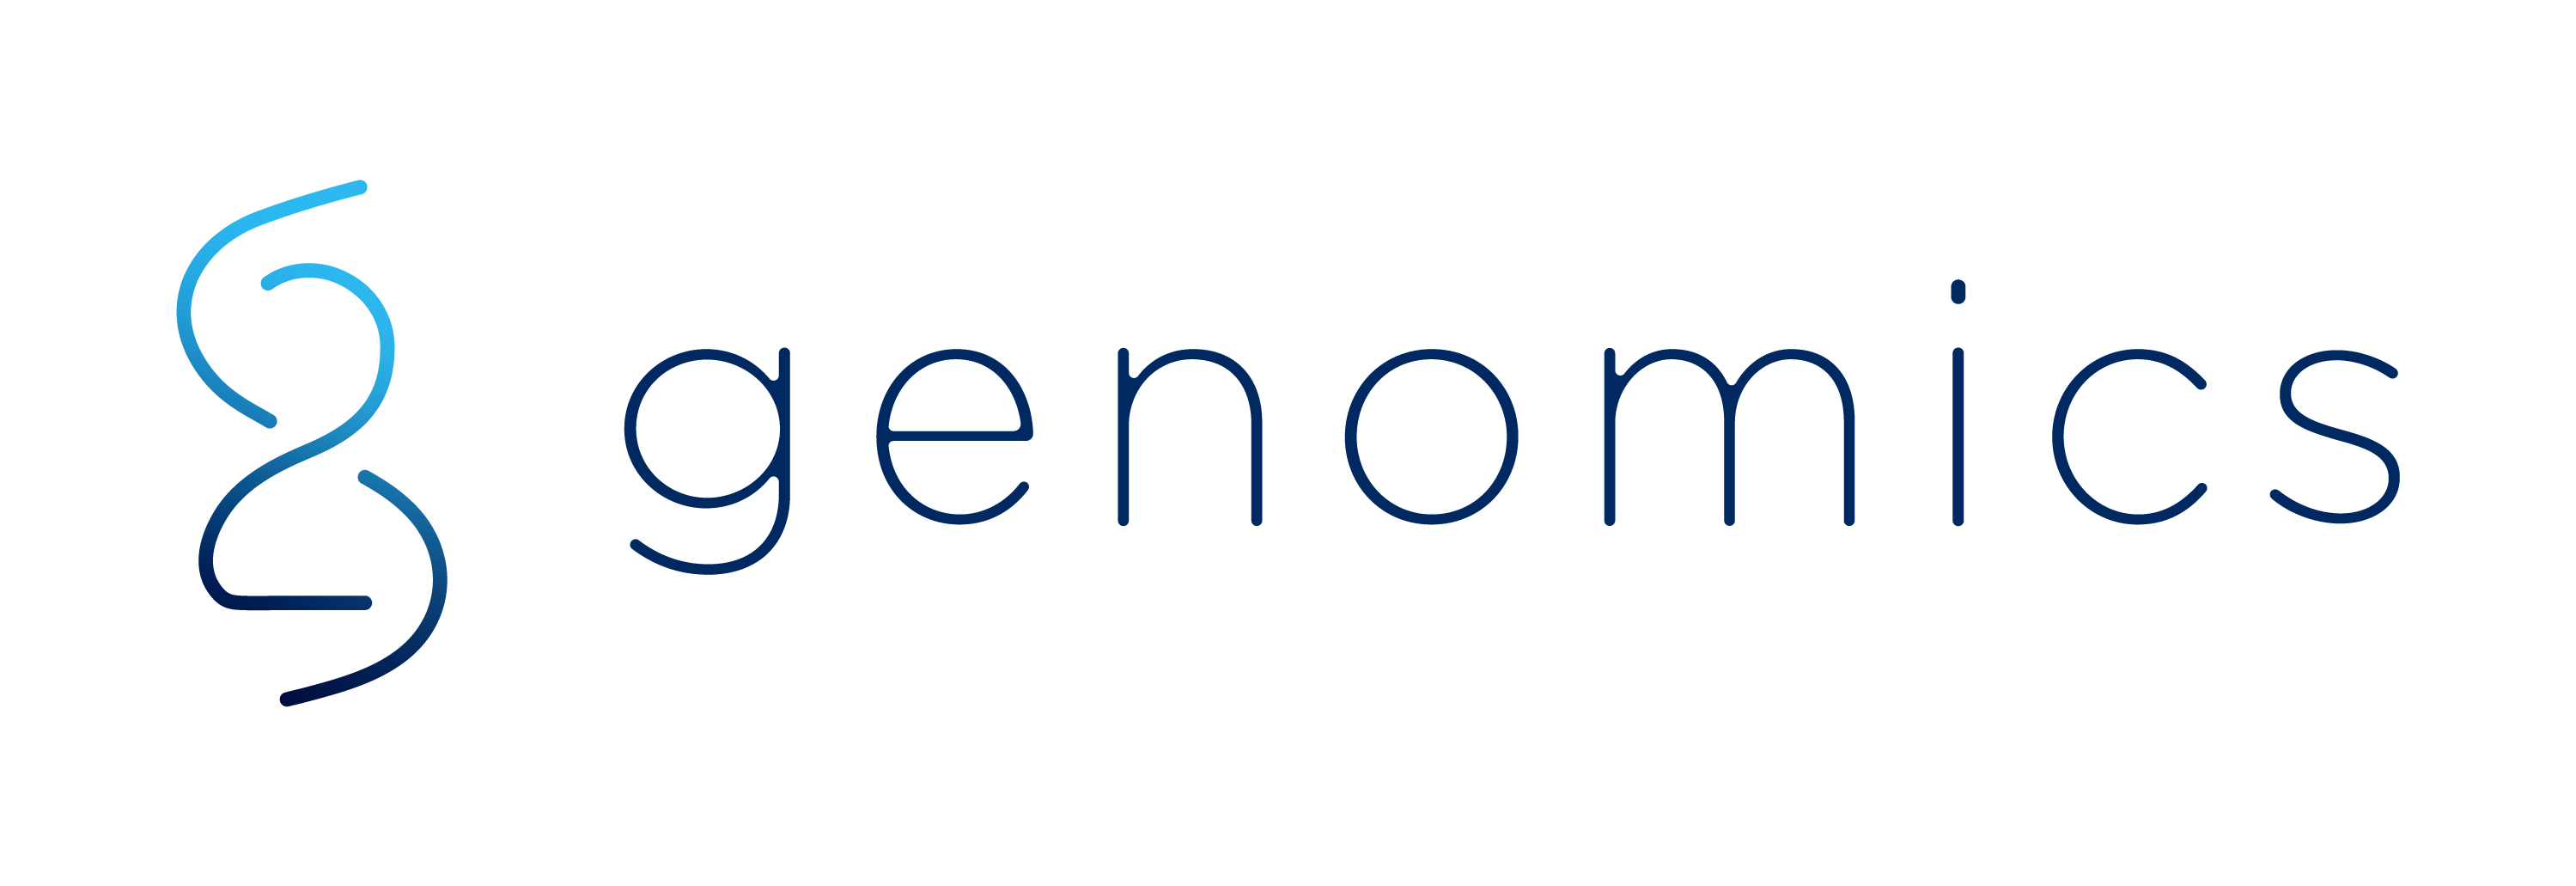 S2 Genomics logo.png